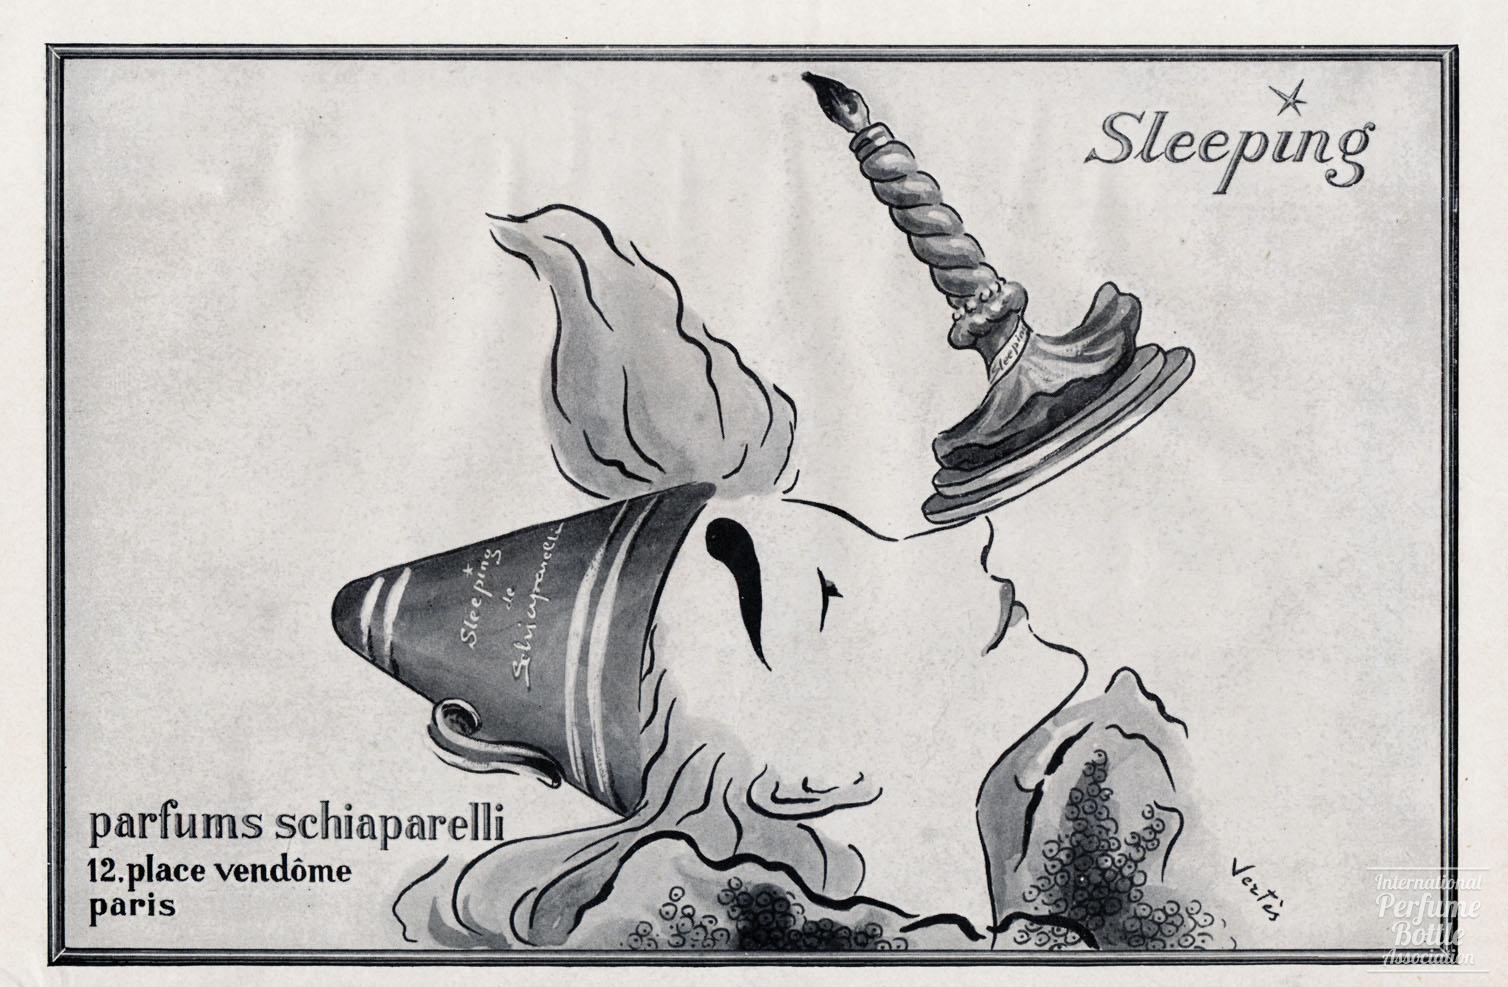 "Sleeping" by Schiaparelli Advertisement - 1939